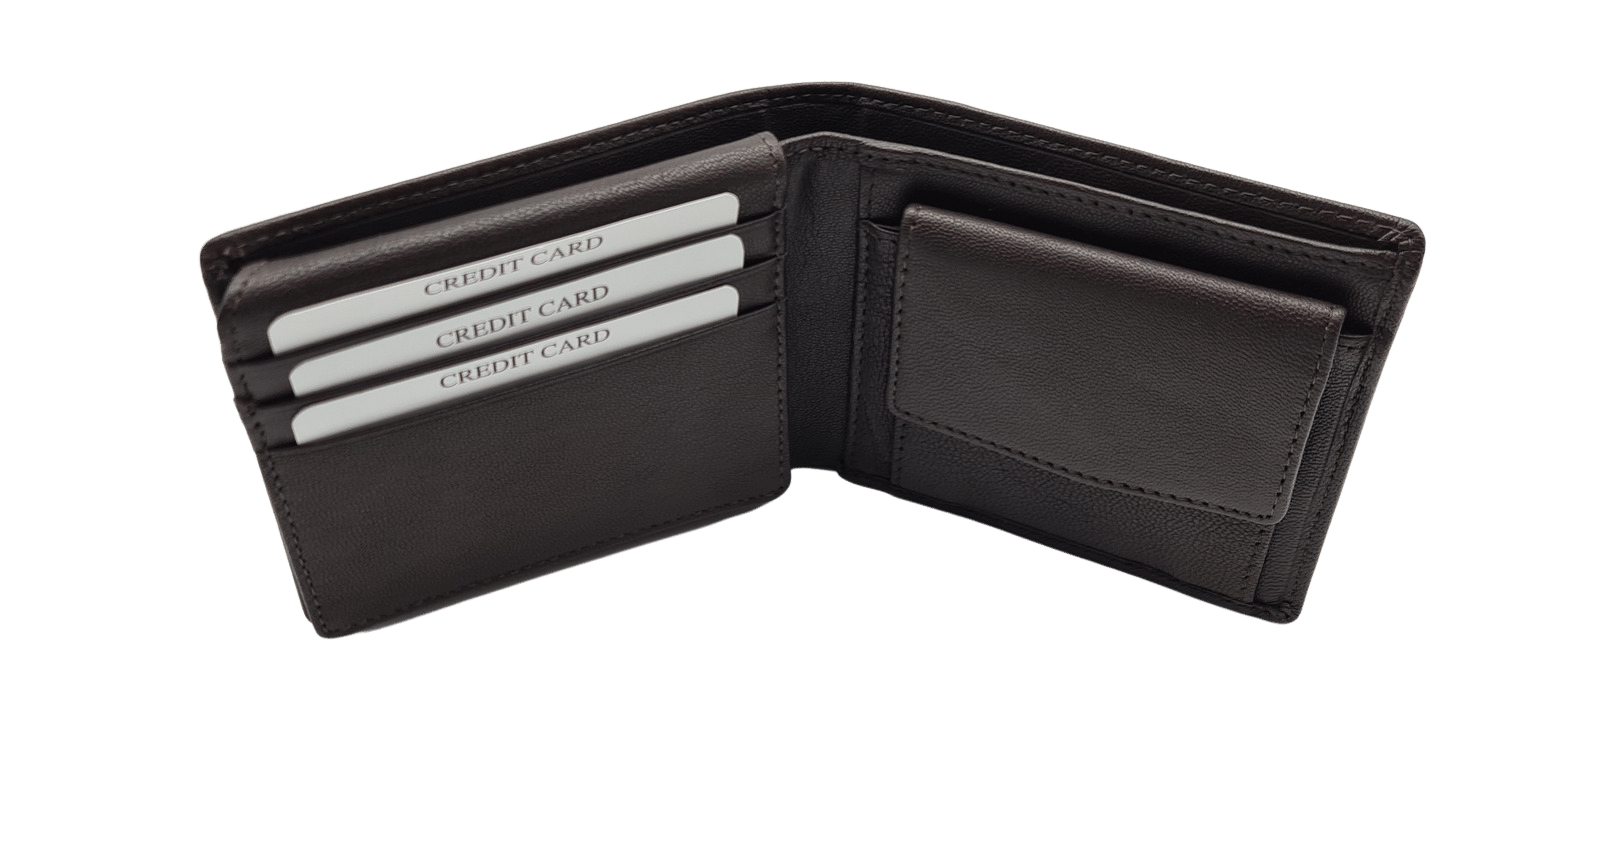 Migant Design Brown and Black leather wallet men 6569 - Migant